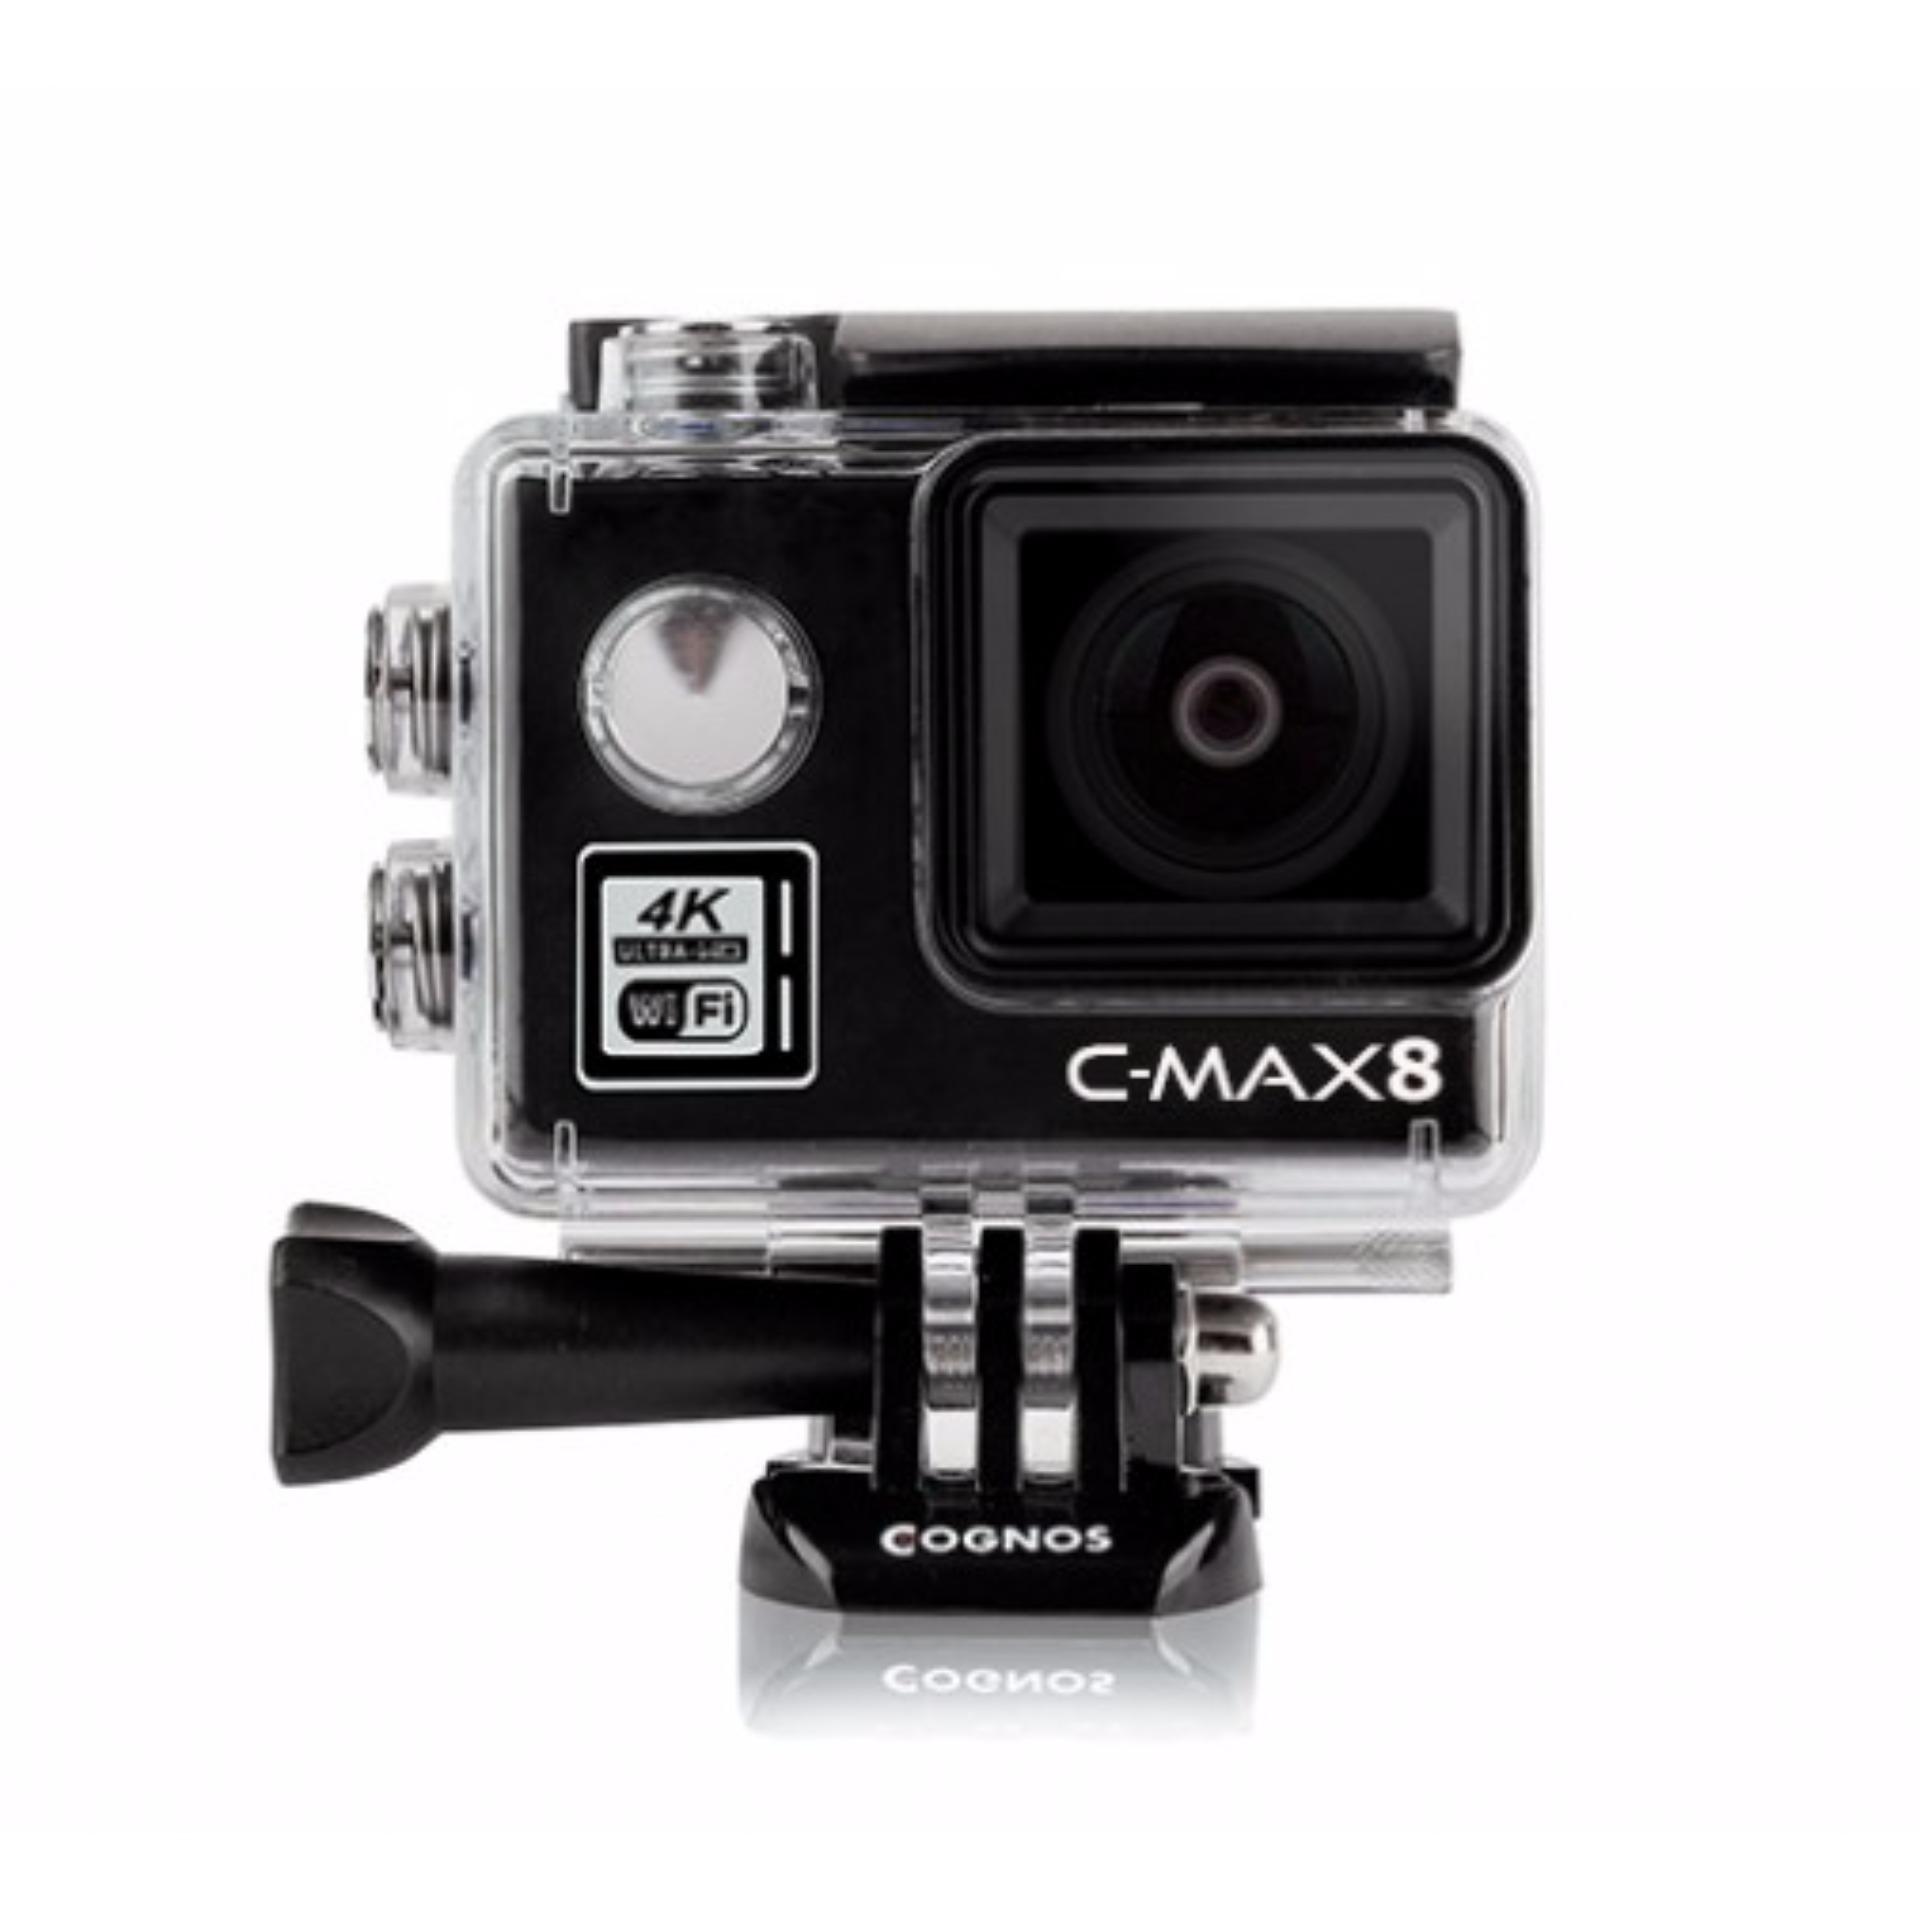 Cognos Omega 4K C-MAX 8 Action Camera 16 MP - MIKA BOX - Hitam